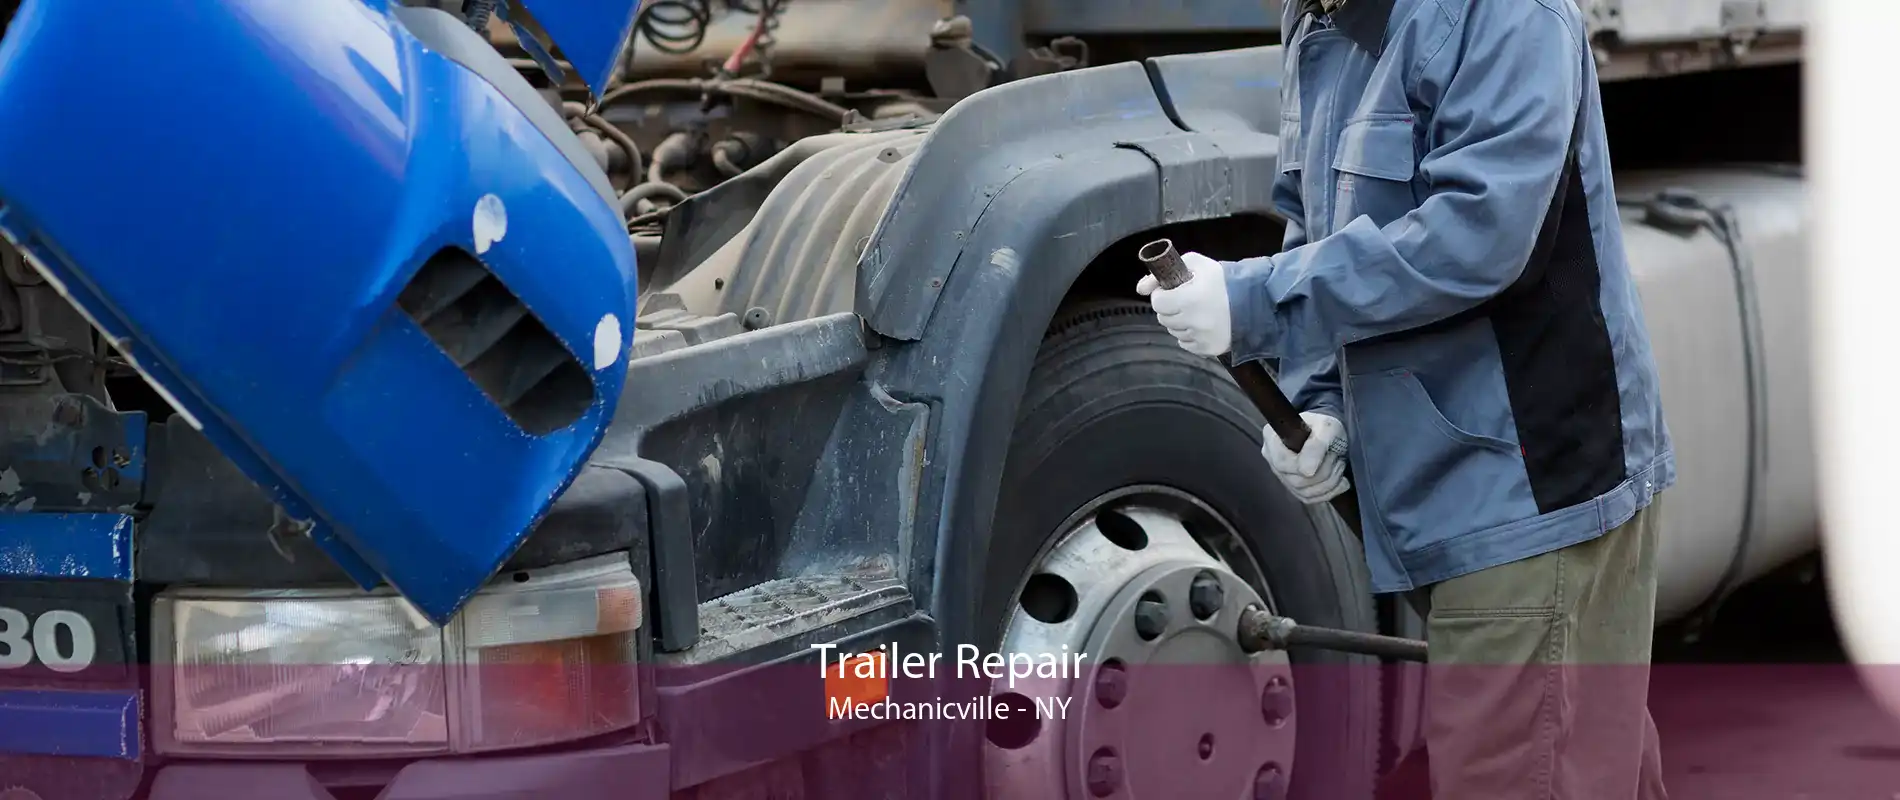 Trailer Repair Mechanicville - NY